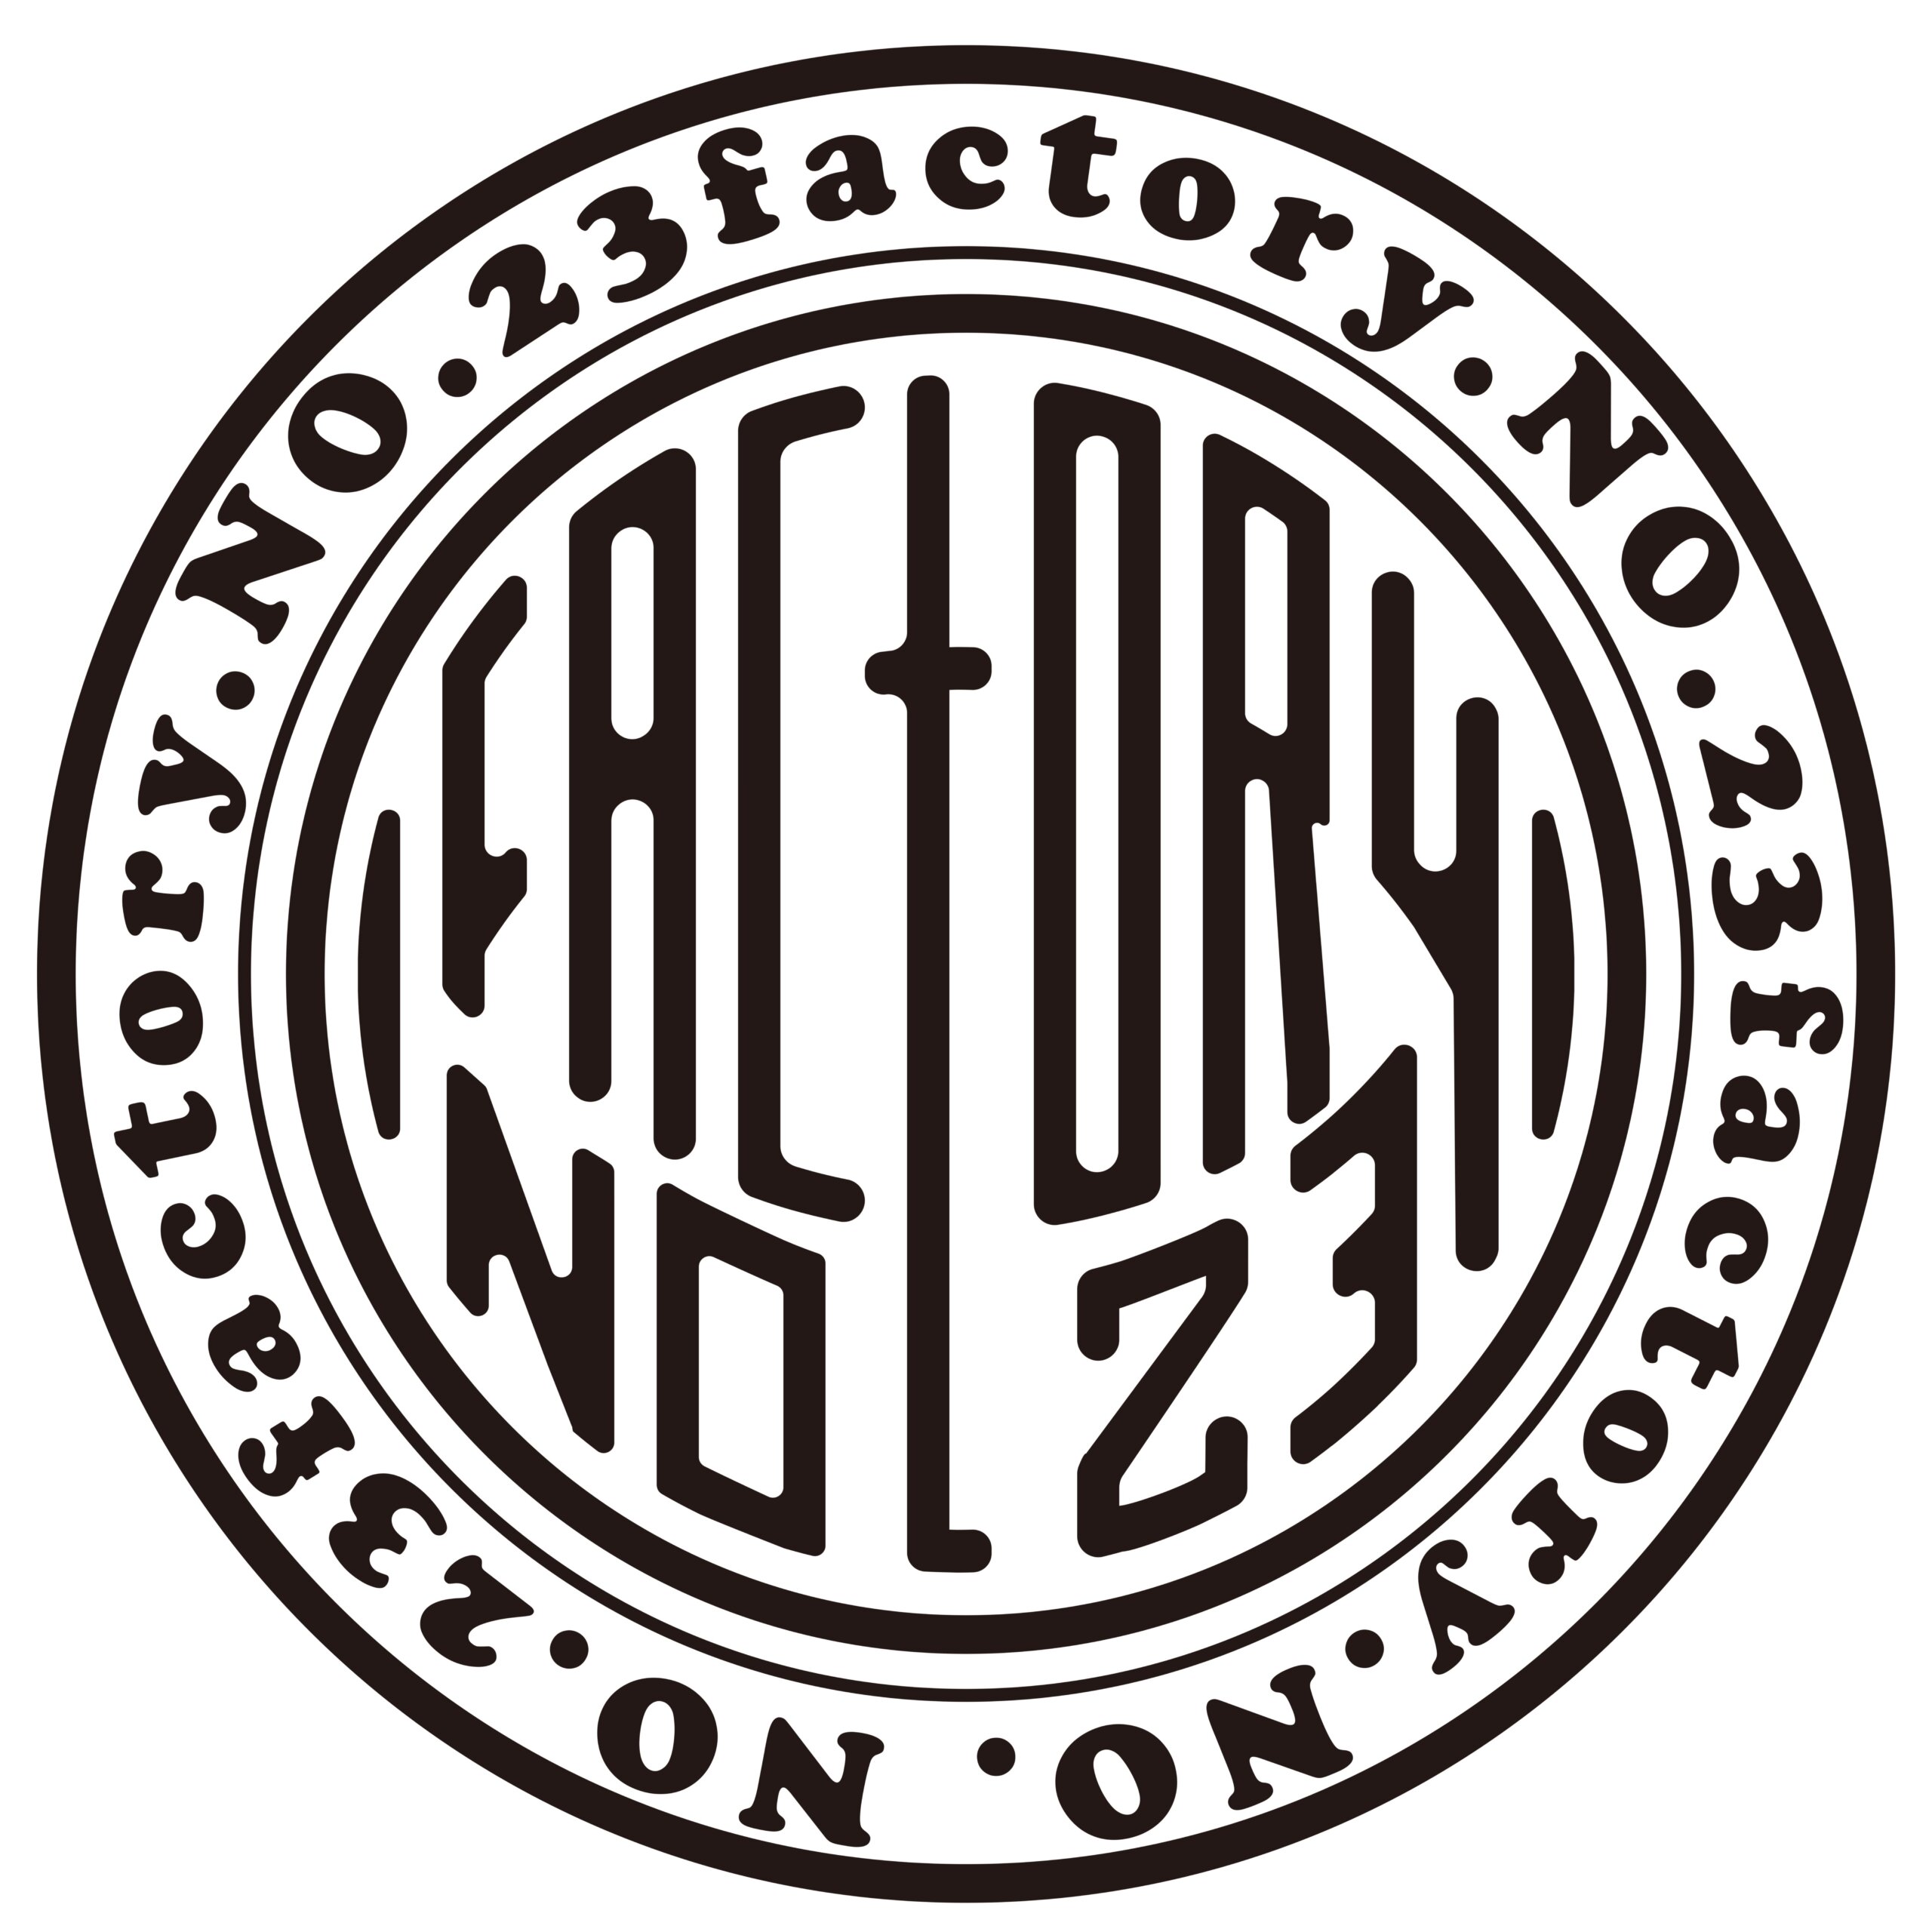 No.23 factory